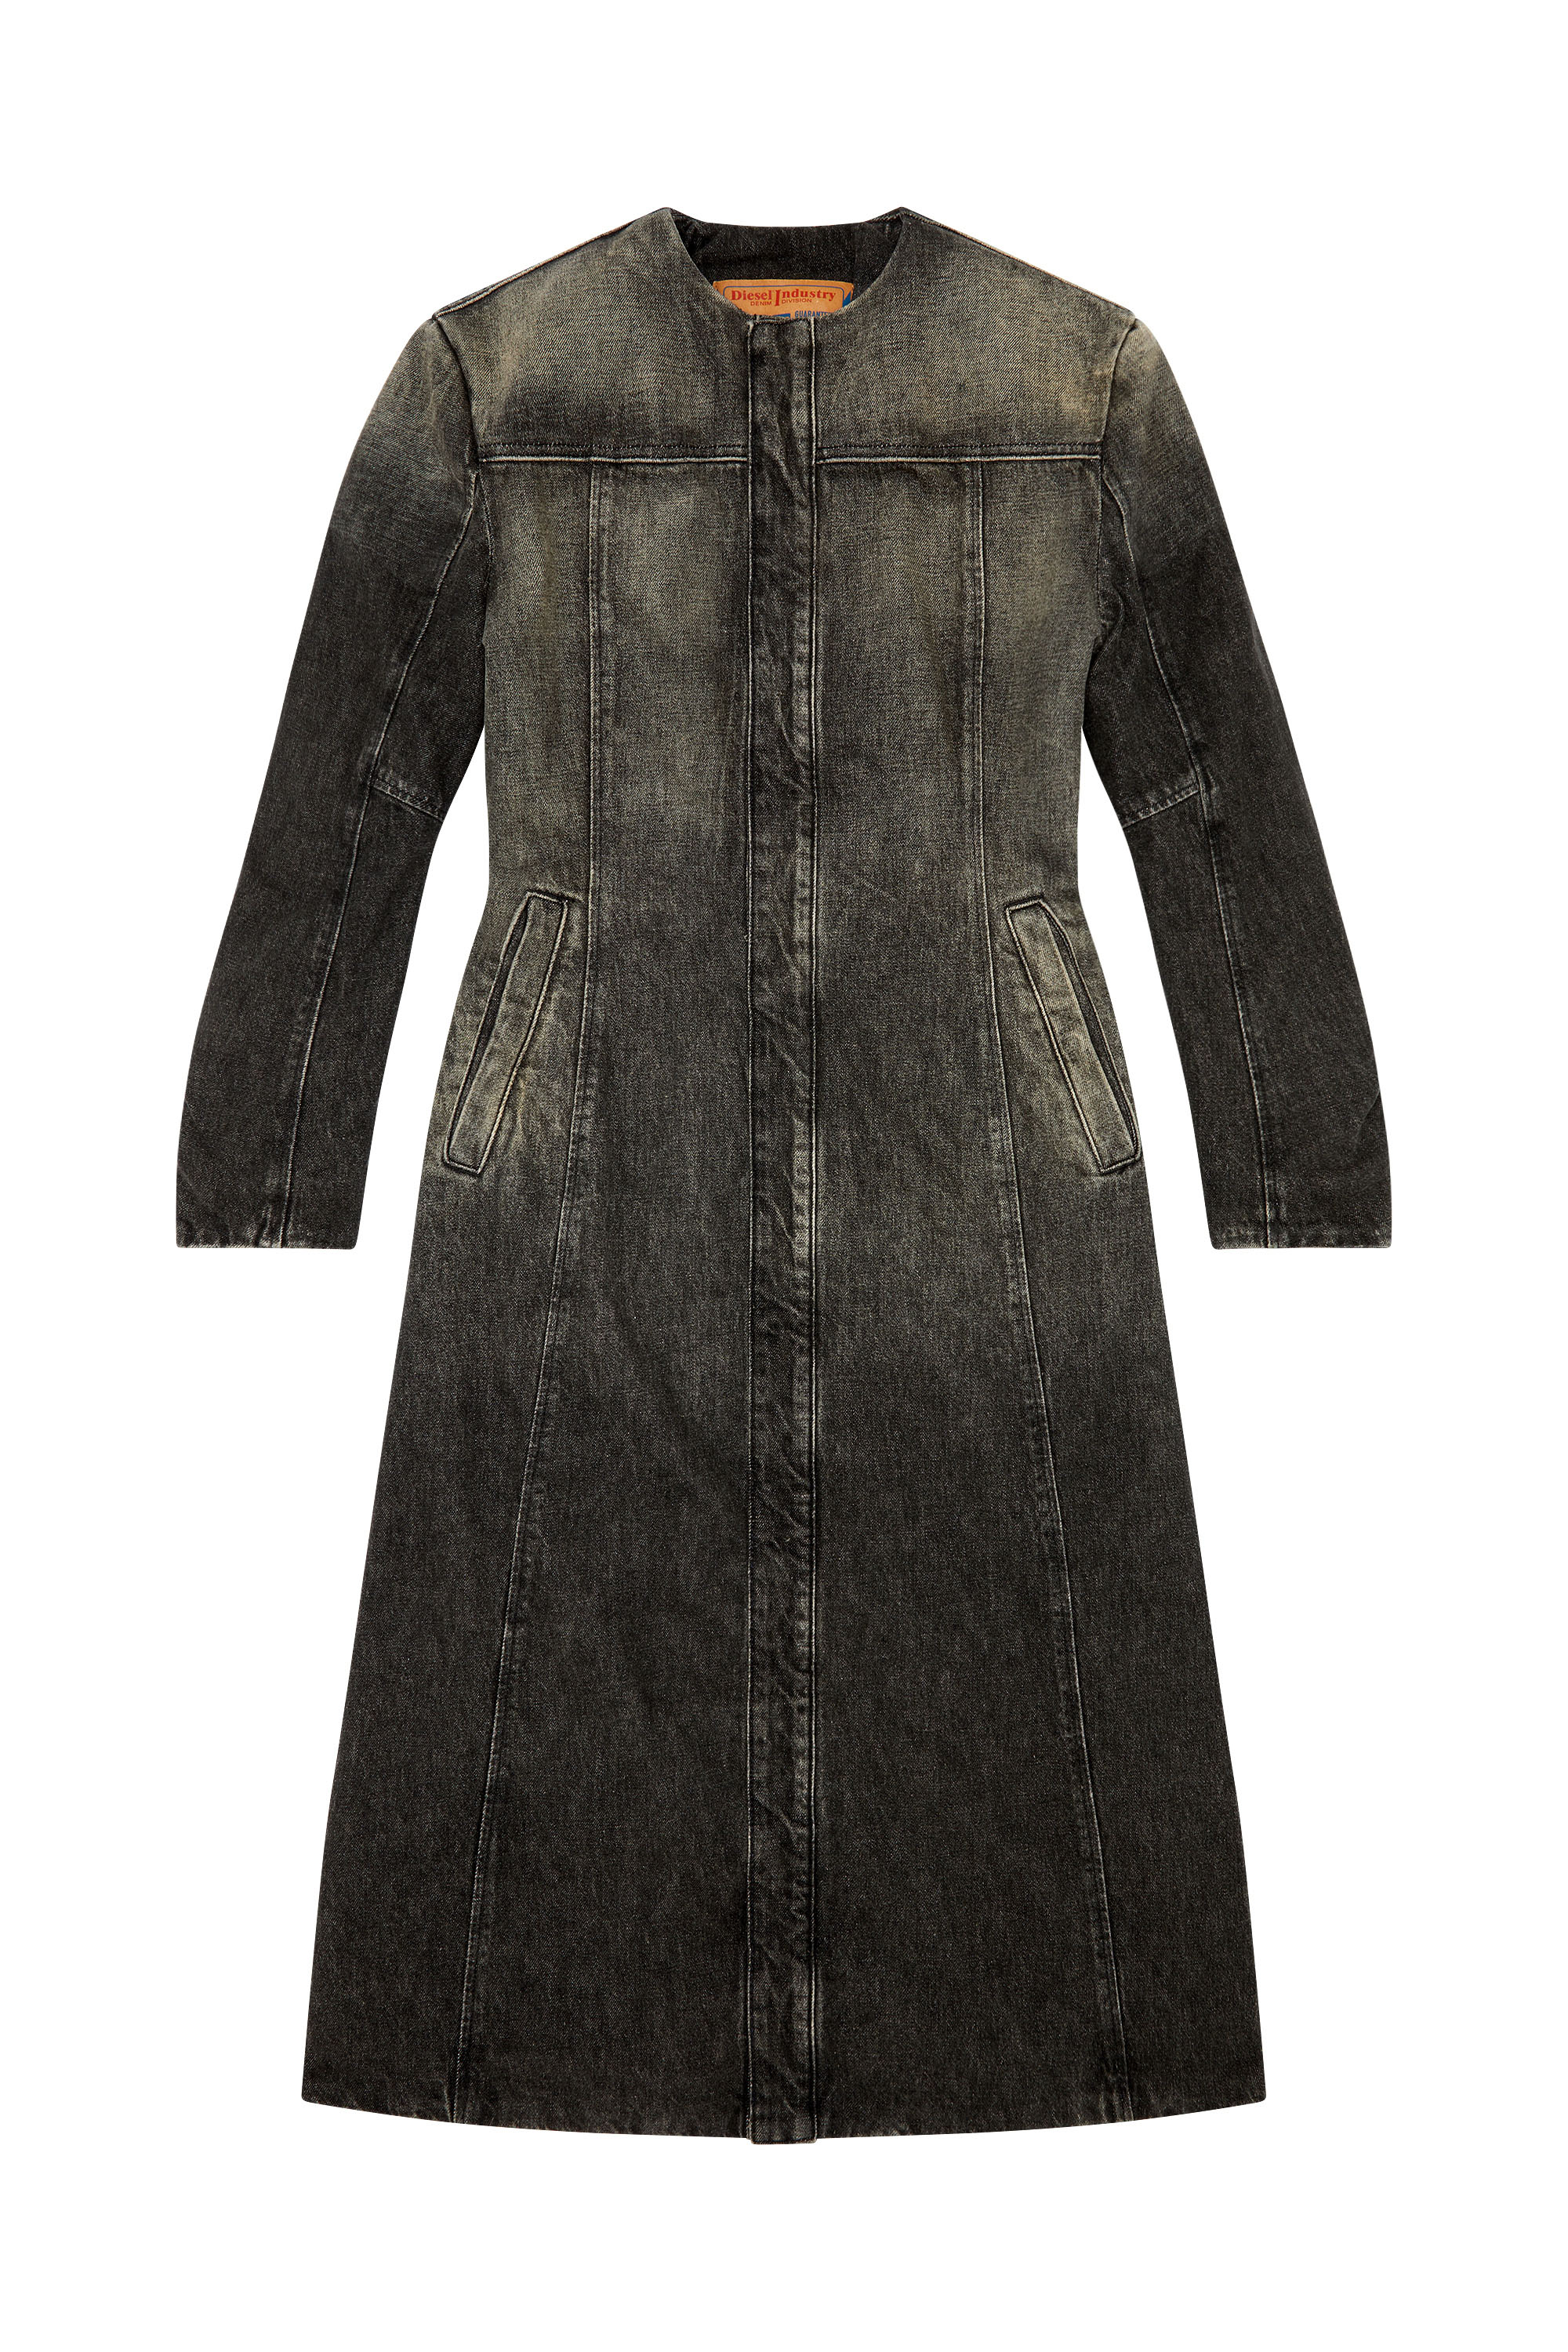 Diesel - DE-SY-S, Woman Denim coat in cotton and hemp in Black - Image 4